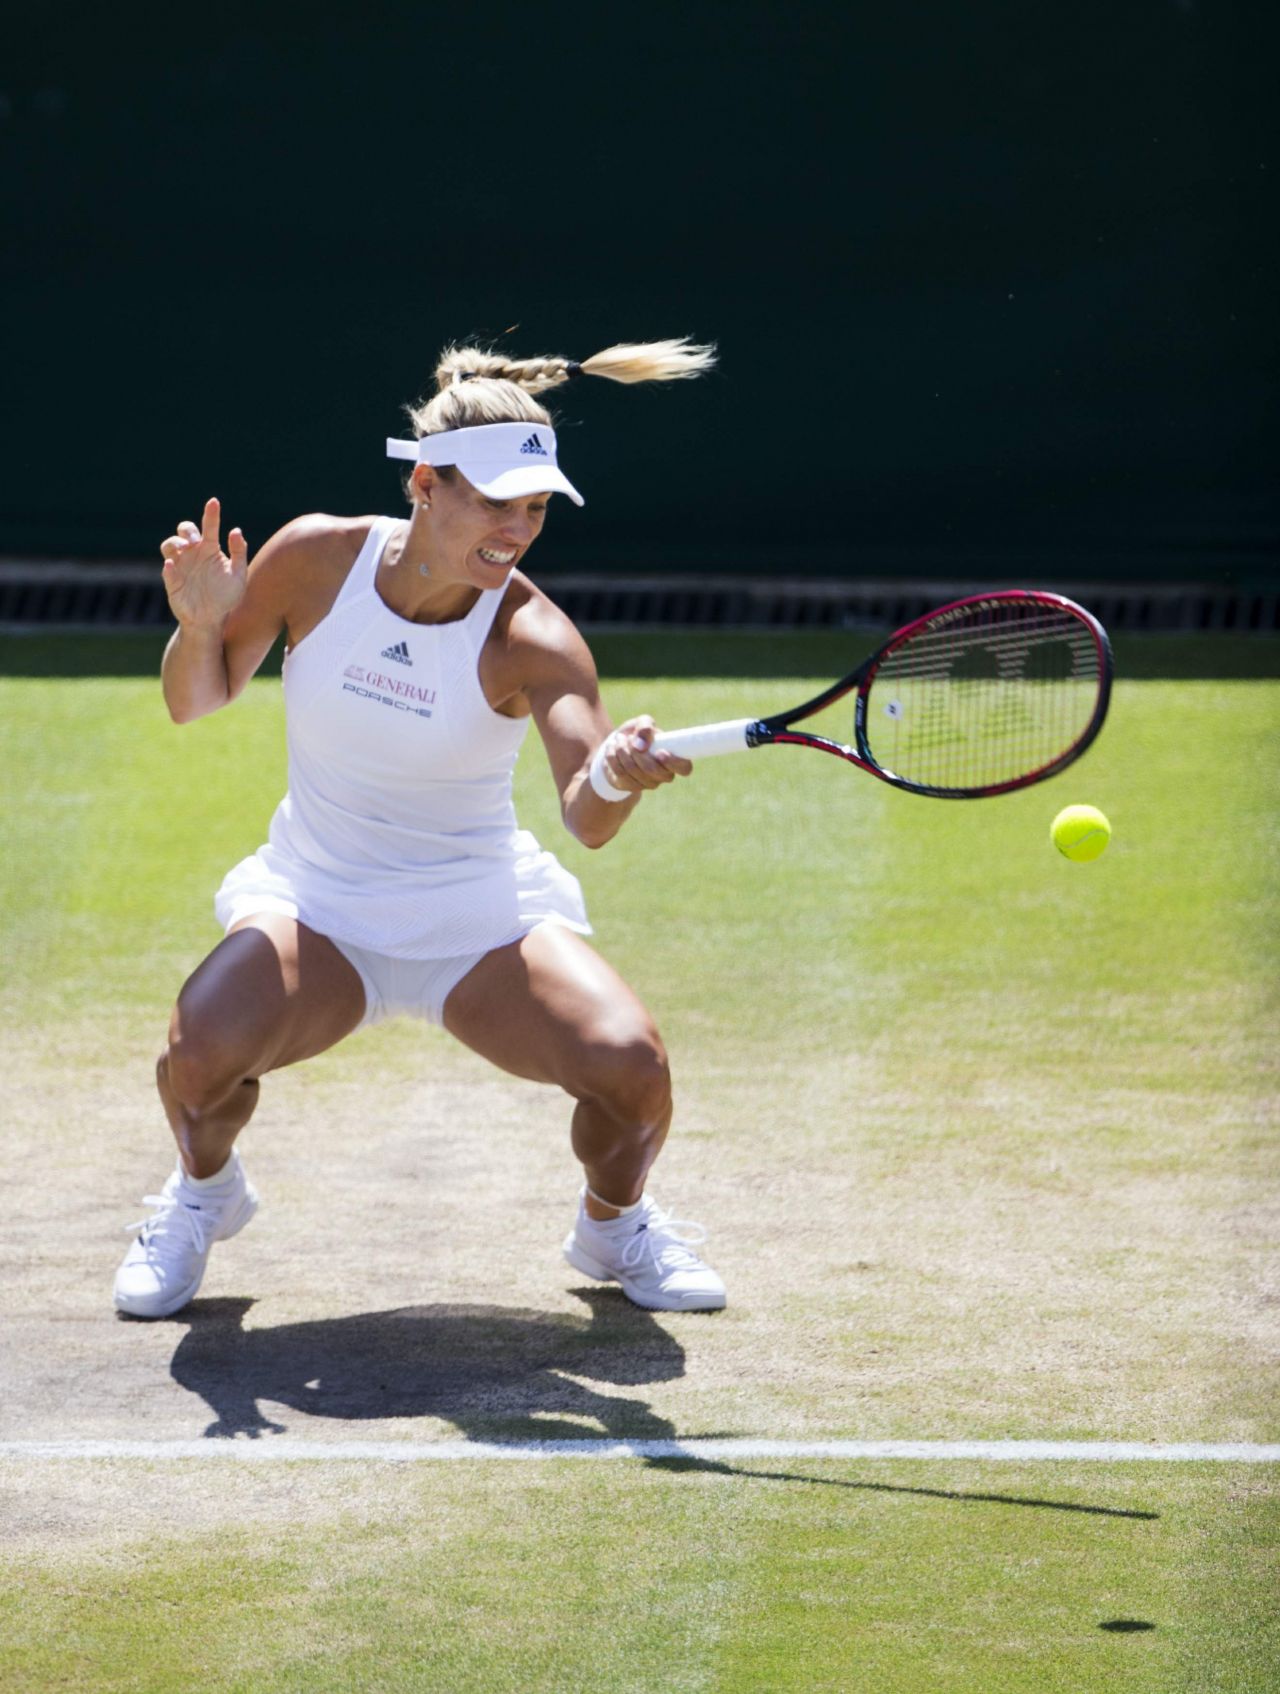 Angelique Kerber – Wimbledon Championships 07/10/2017